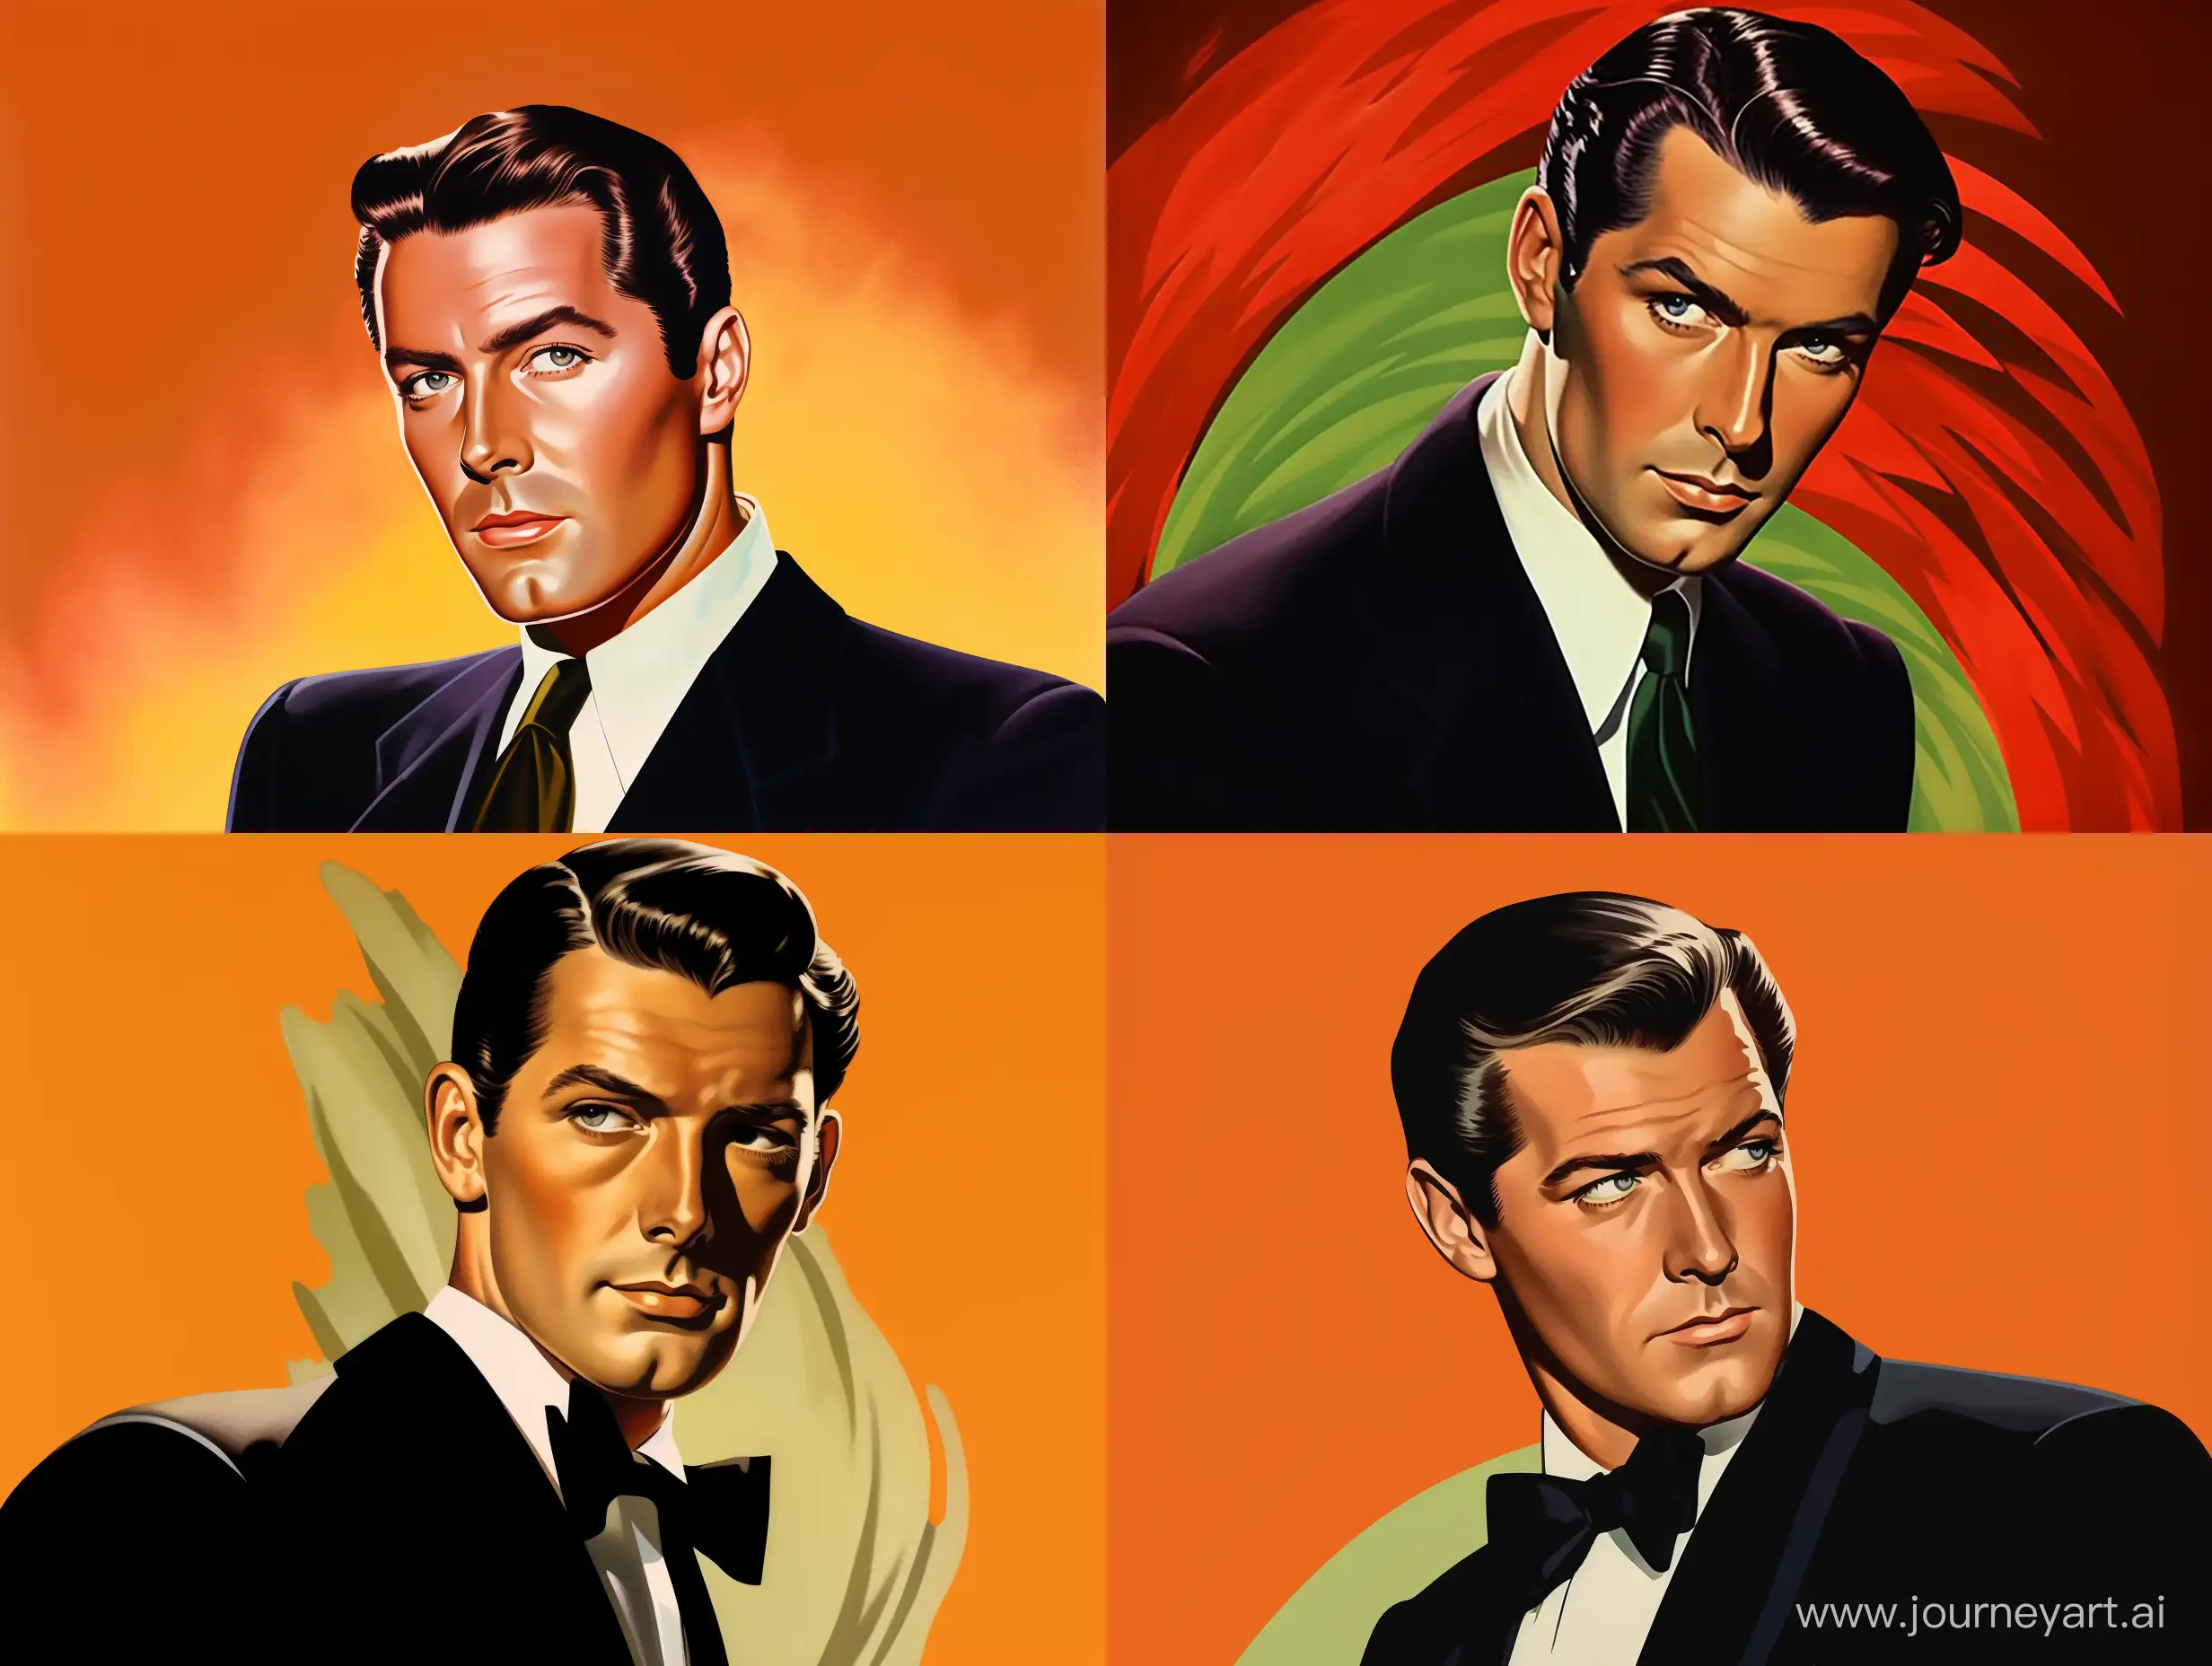 Glamorous-1940s-Movie-Star-in-Robert-Maguire-Style-Pulp-Art